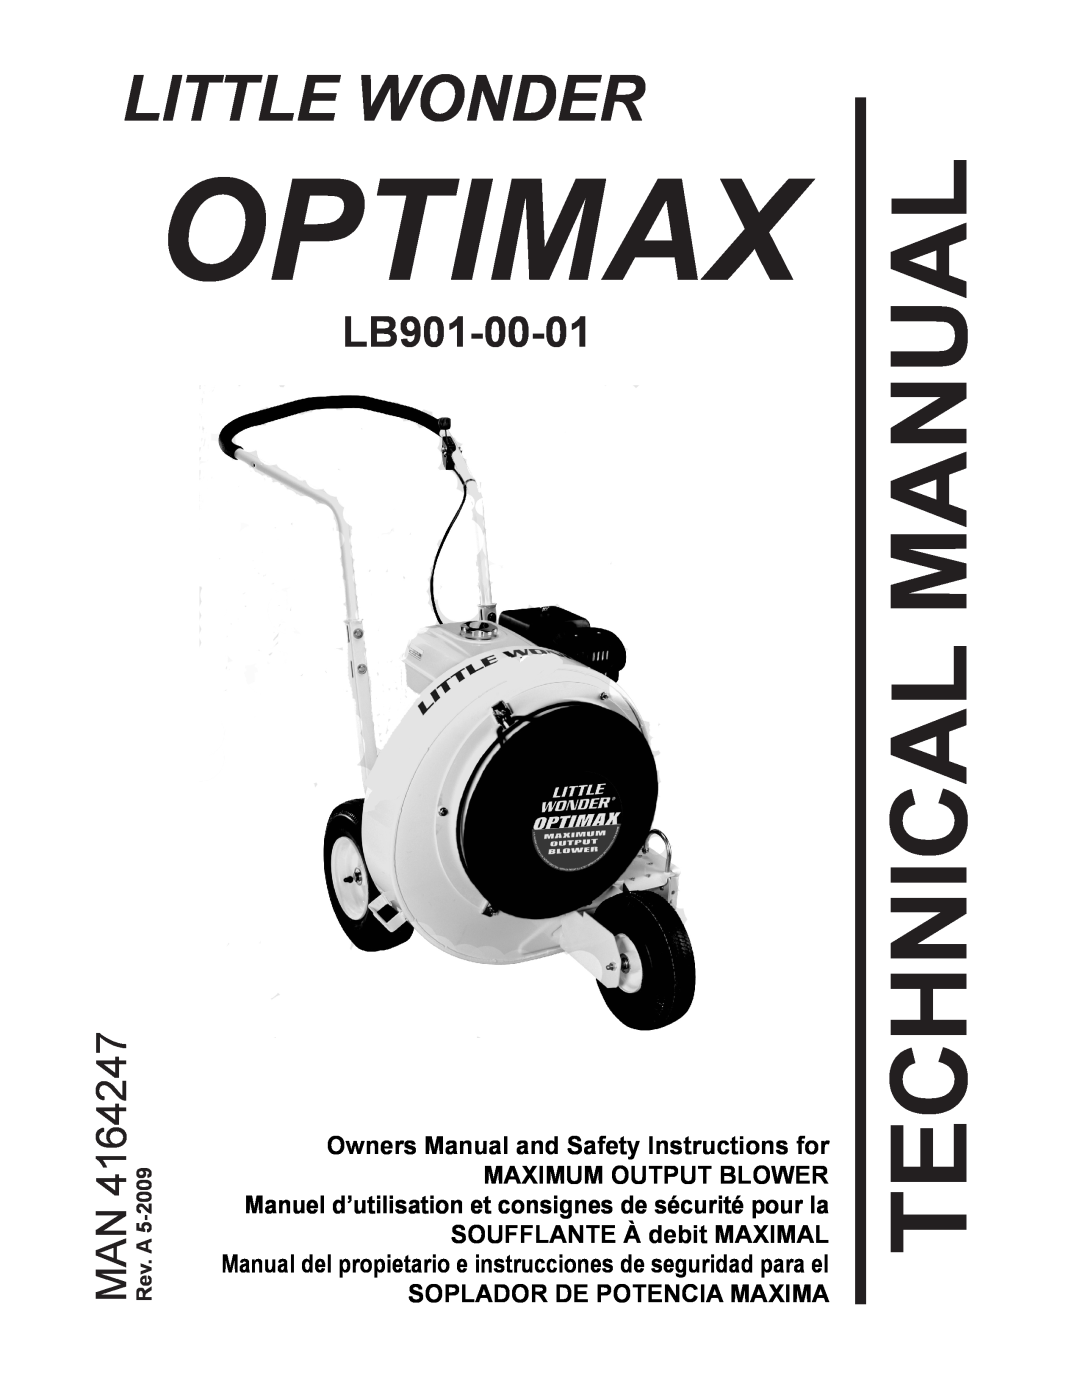 Little Wonder LB901-00-01 technical manual Technical Manual, Little Wonder, Maximum Output Blower, 4164247MAN 2009-5ARev 